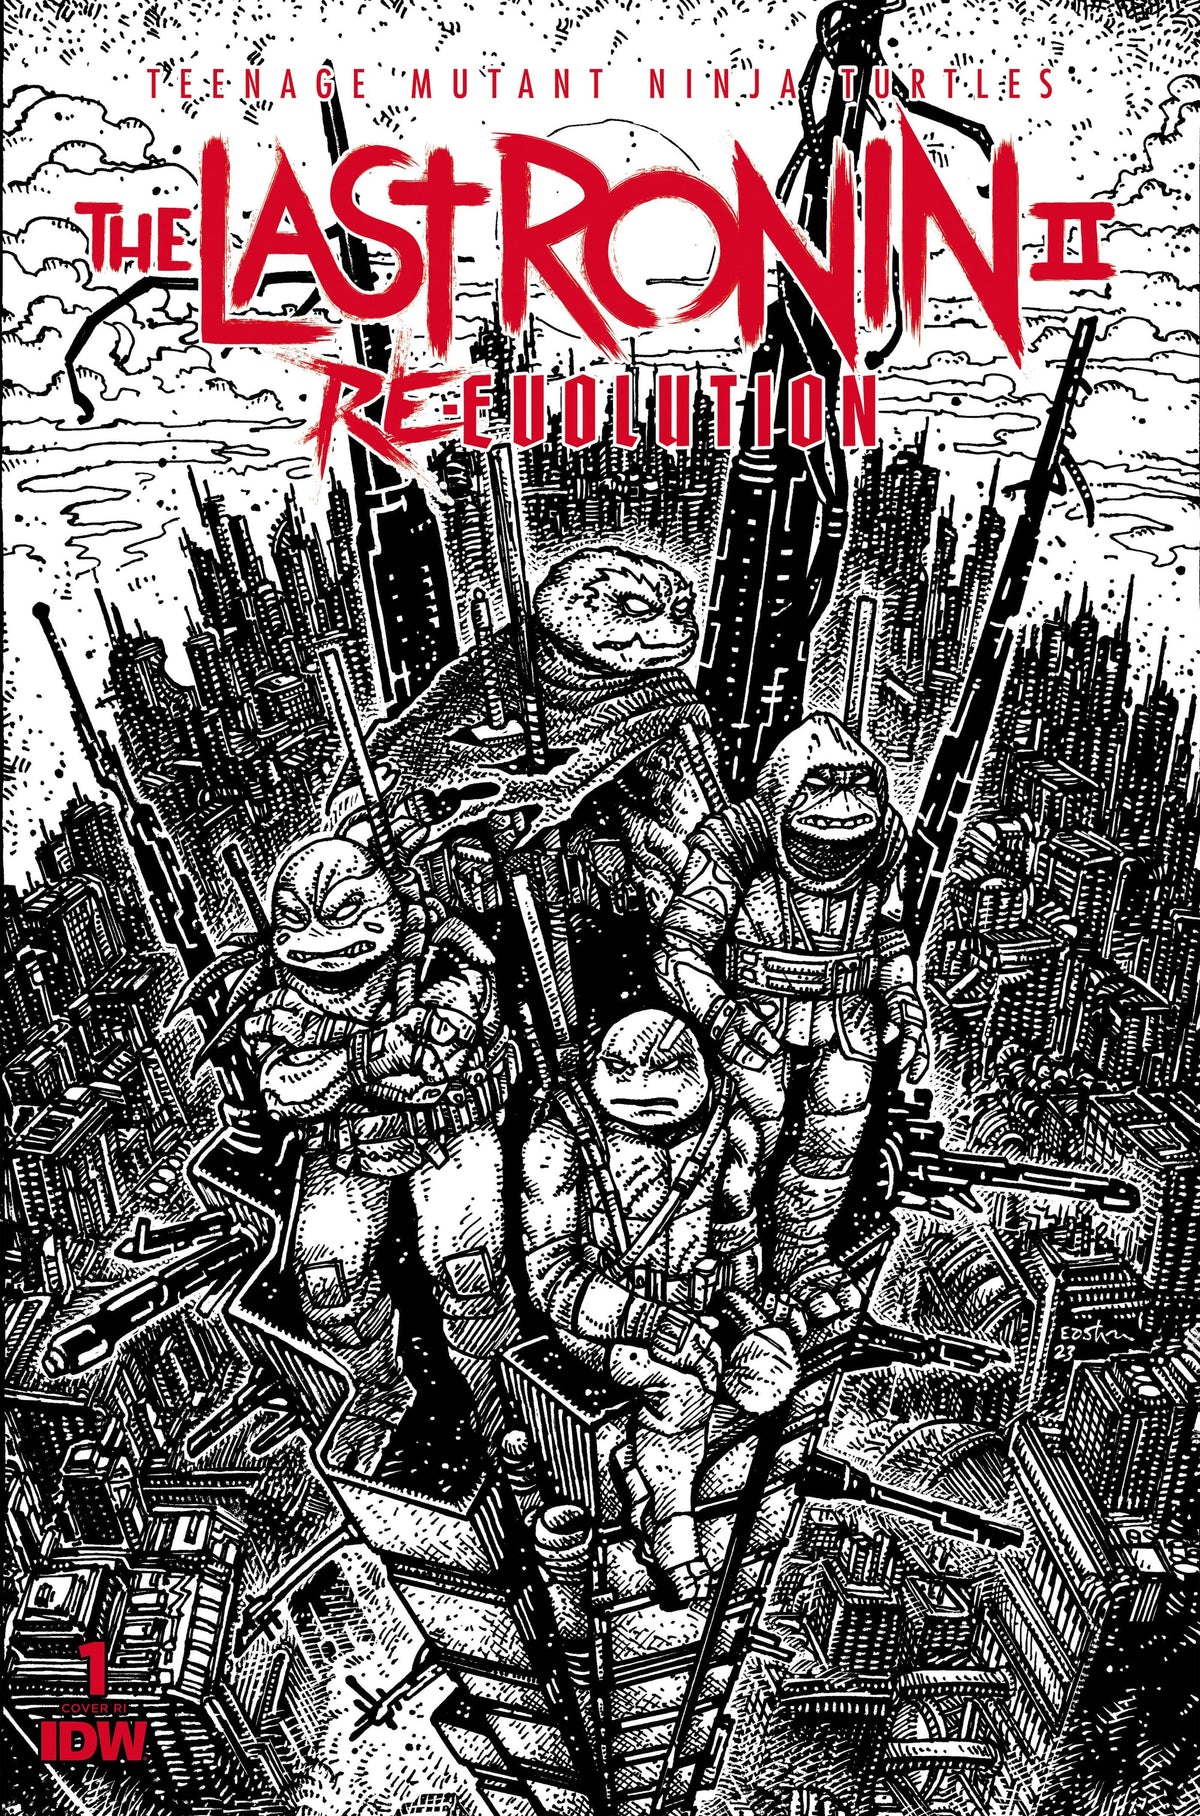 TMNT THE LAST RONIN II RE EVOLUTION #1 - THE SUPER SHRED BUNDLE